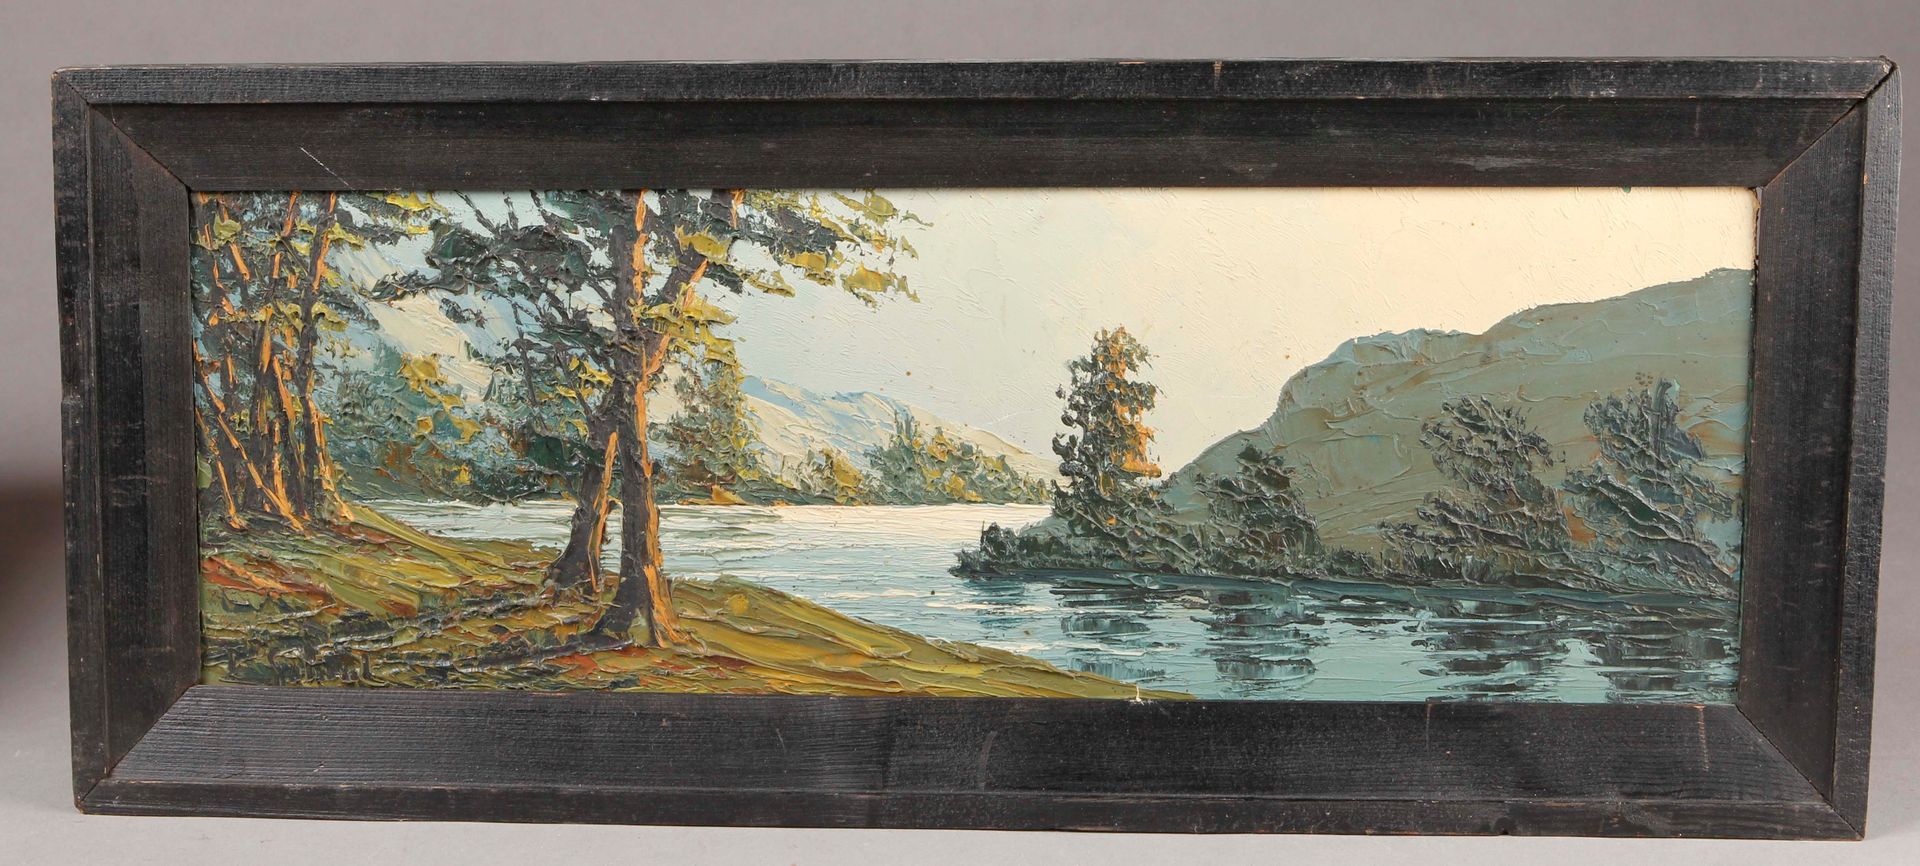 Null 20世纪的学校
干草堆和山湖
纸板上的两个油彩。
(发黑的木质框架，事故）。
17,5 x 49 cm